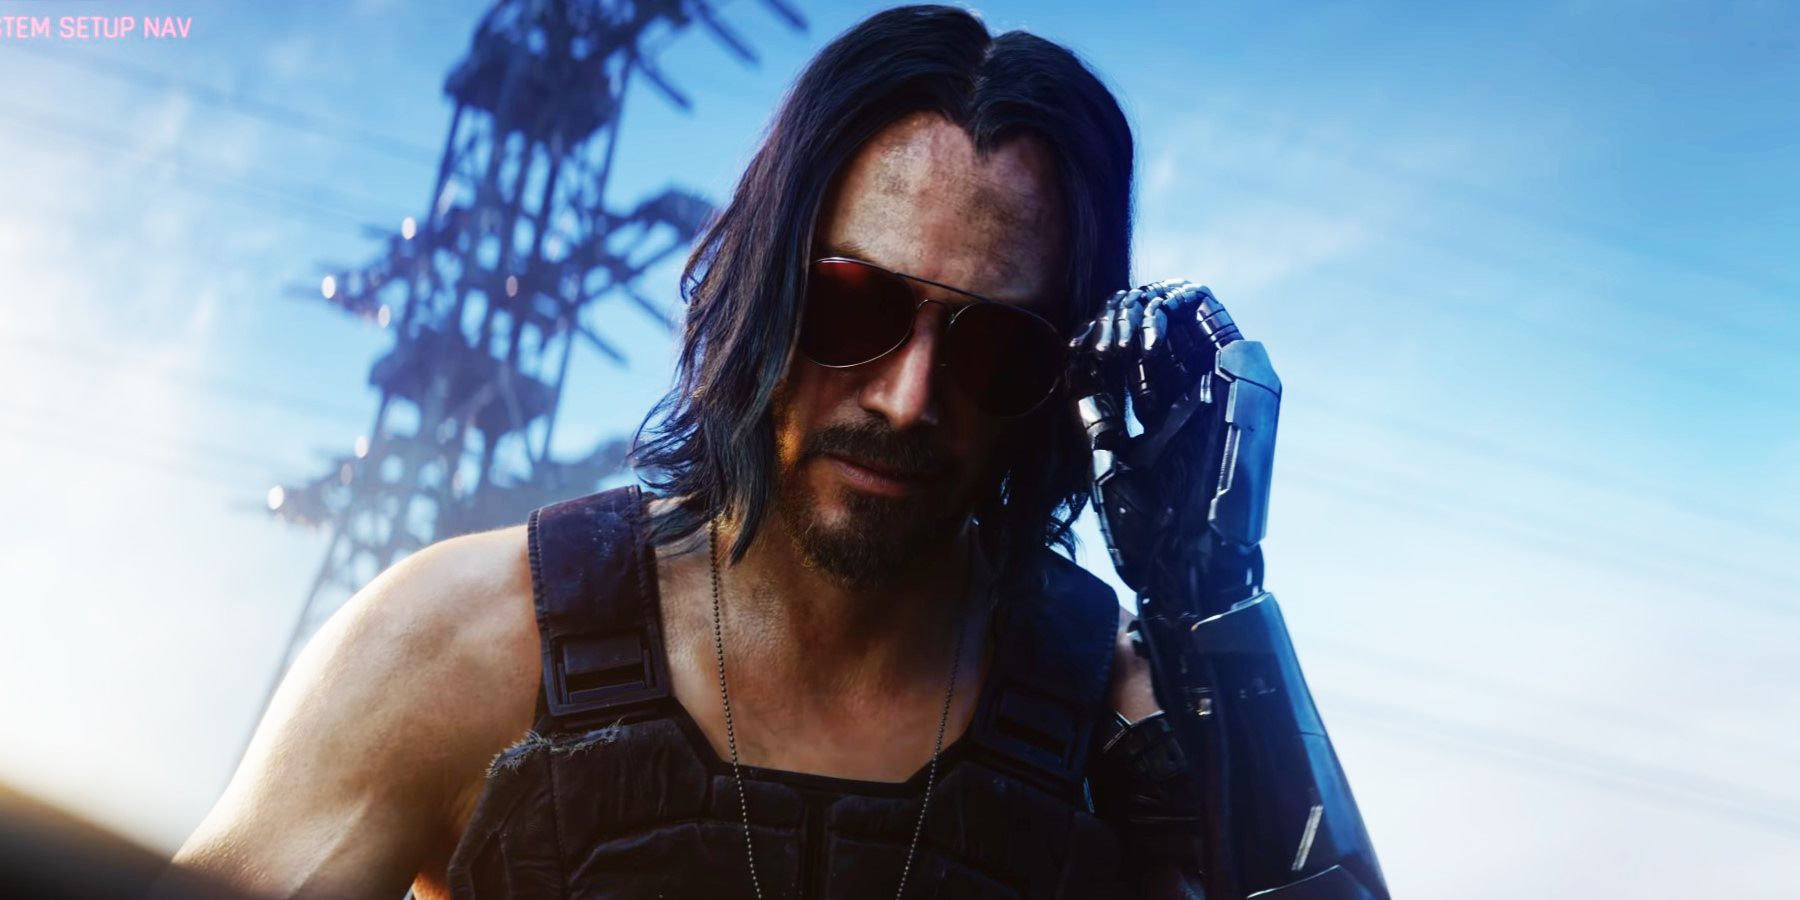 A still from Cyberpunk 2077's E3 2019 trailer showing Keanu Reeves' Johnny Silverhand.